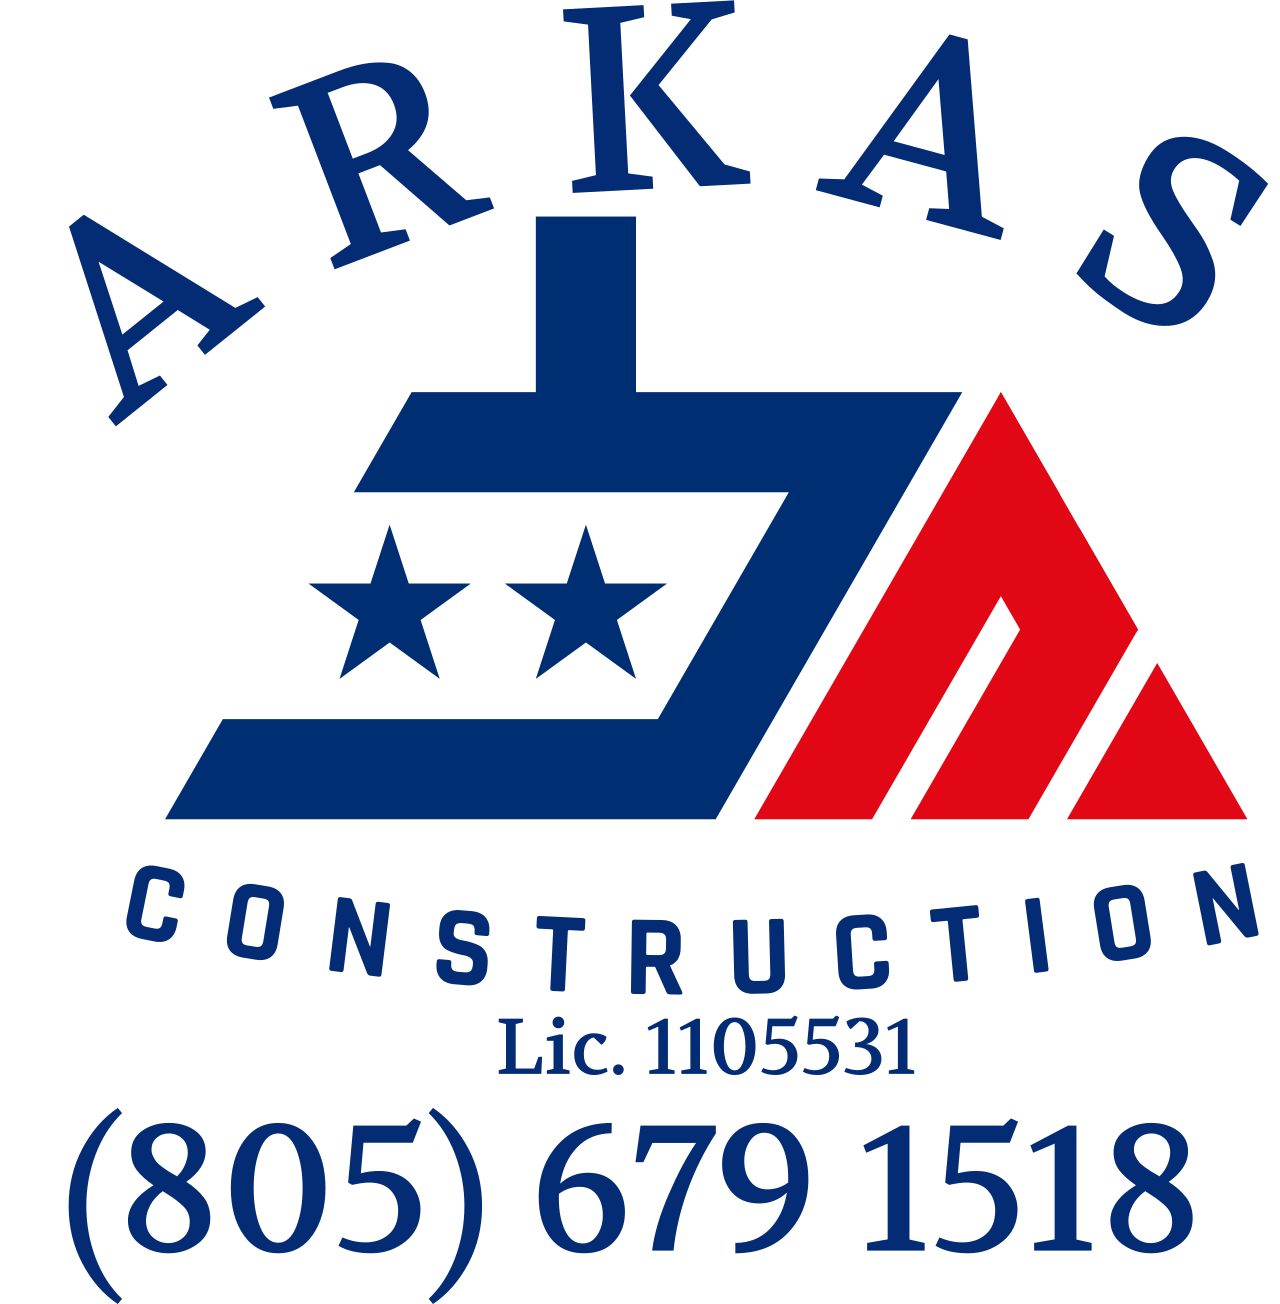 ARKAS  CONSTRUCTION's logo